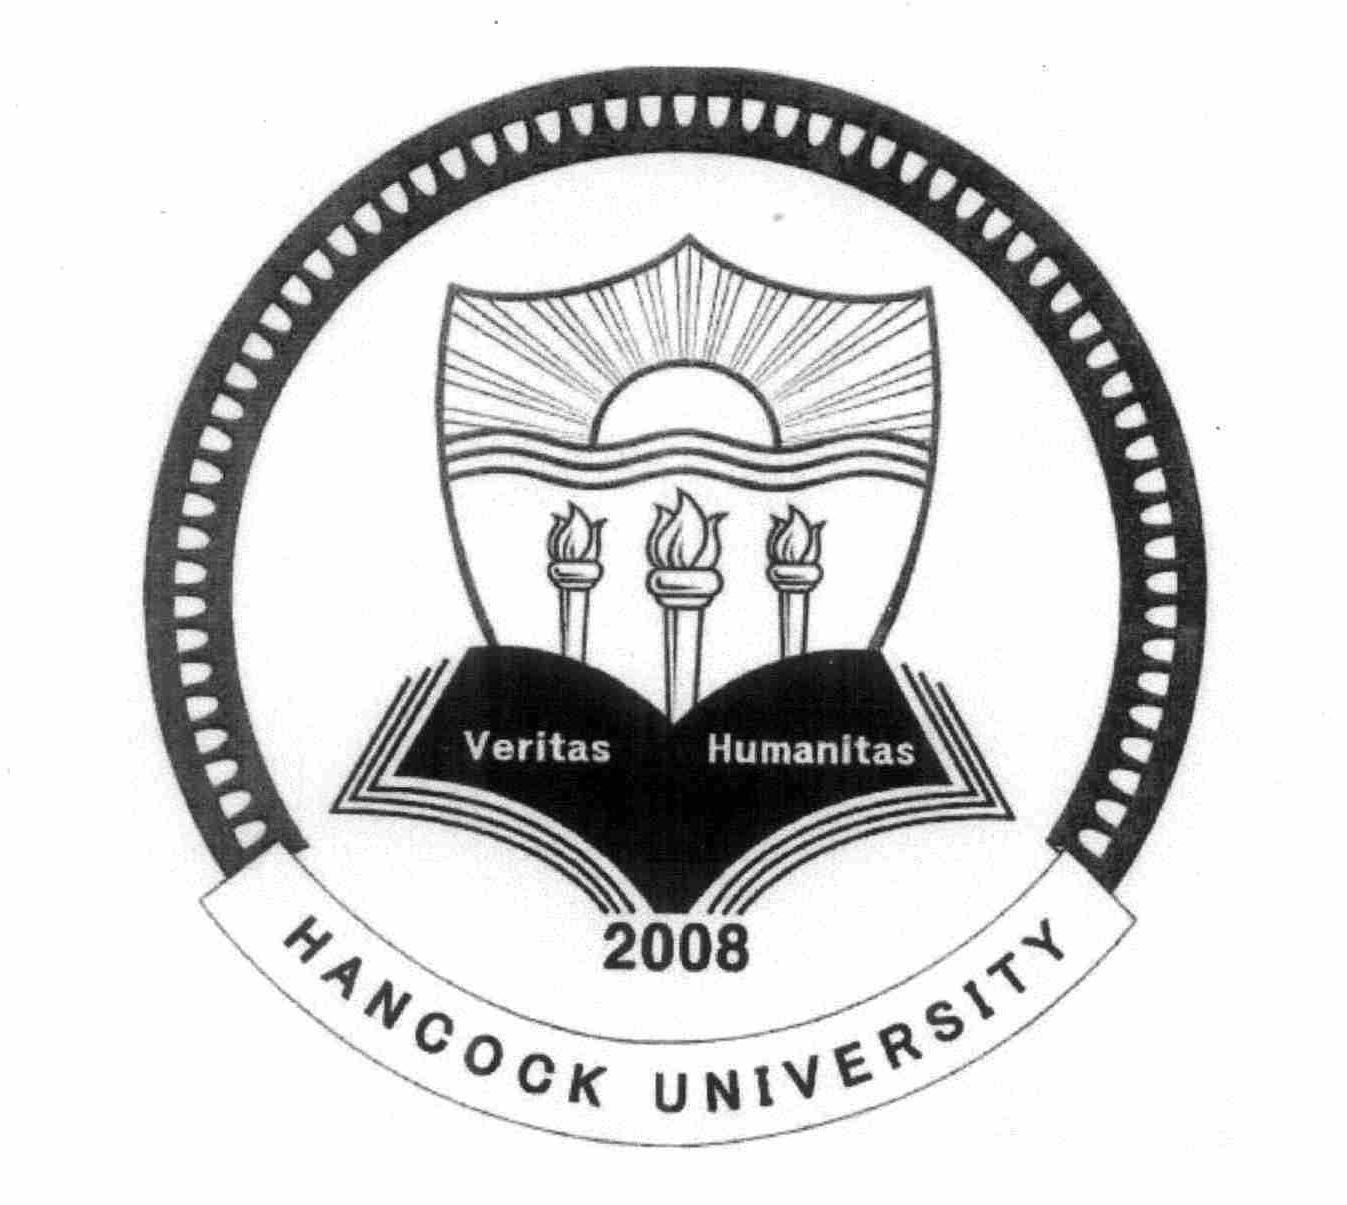  HANCOCK UNIVERSITY VERITAS HUMANITAS 2008